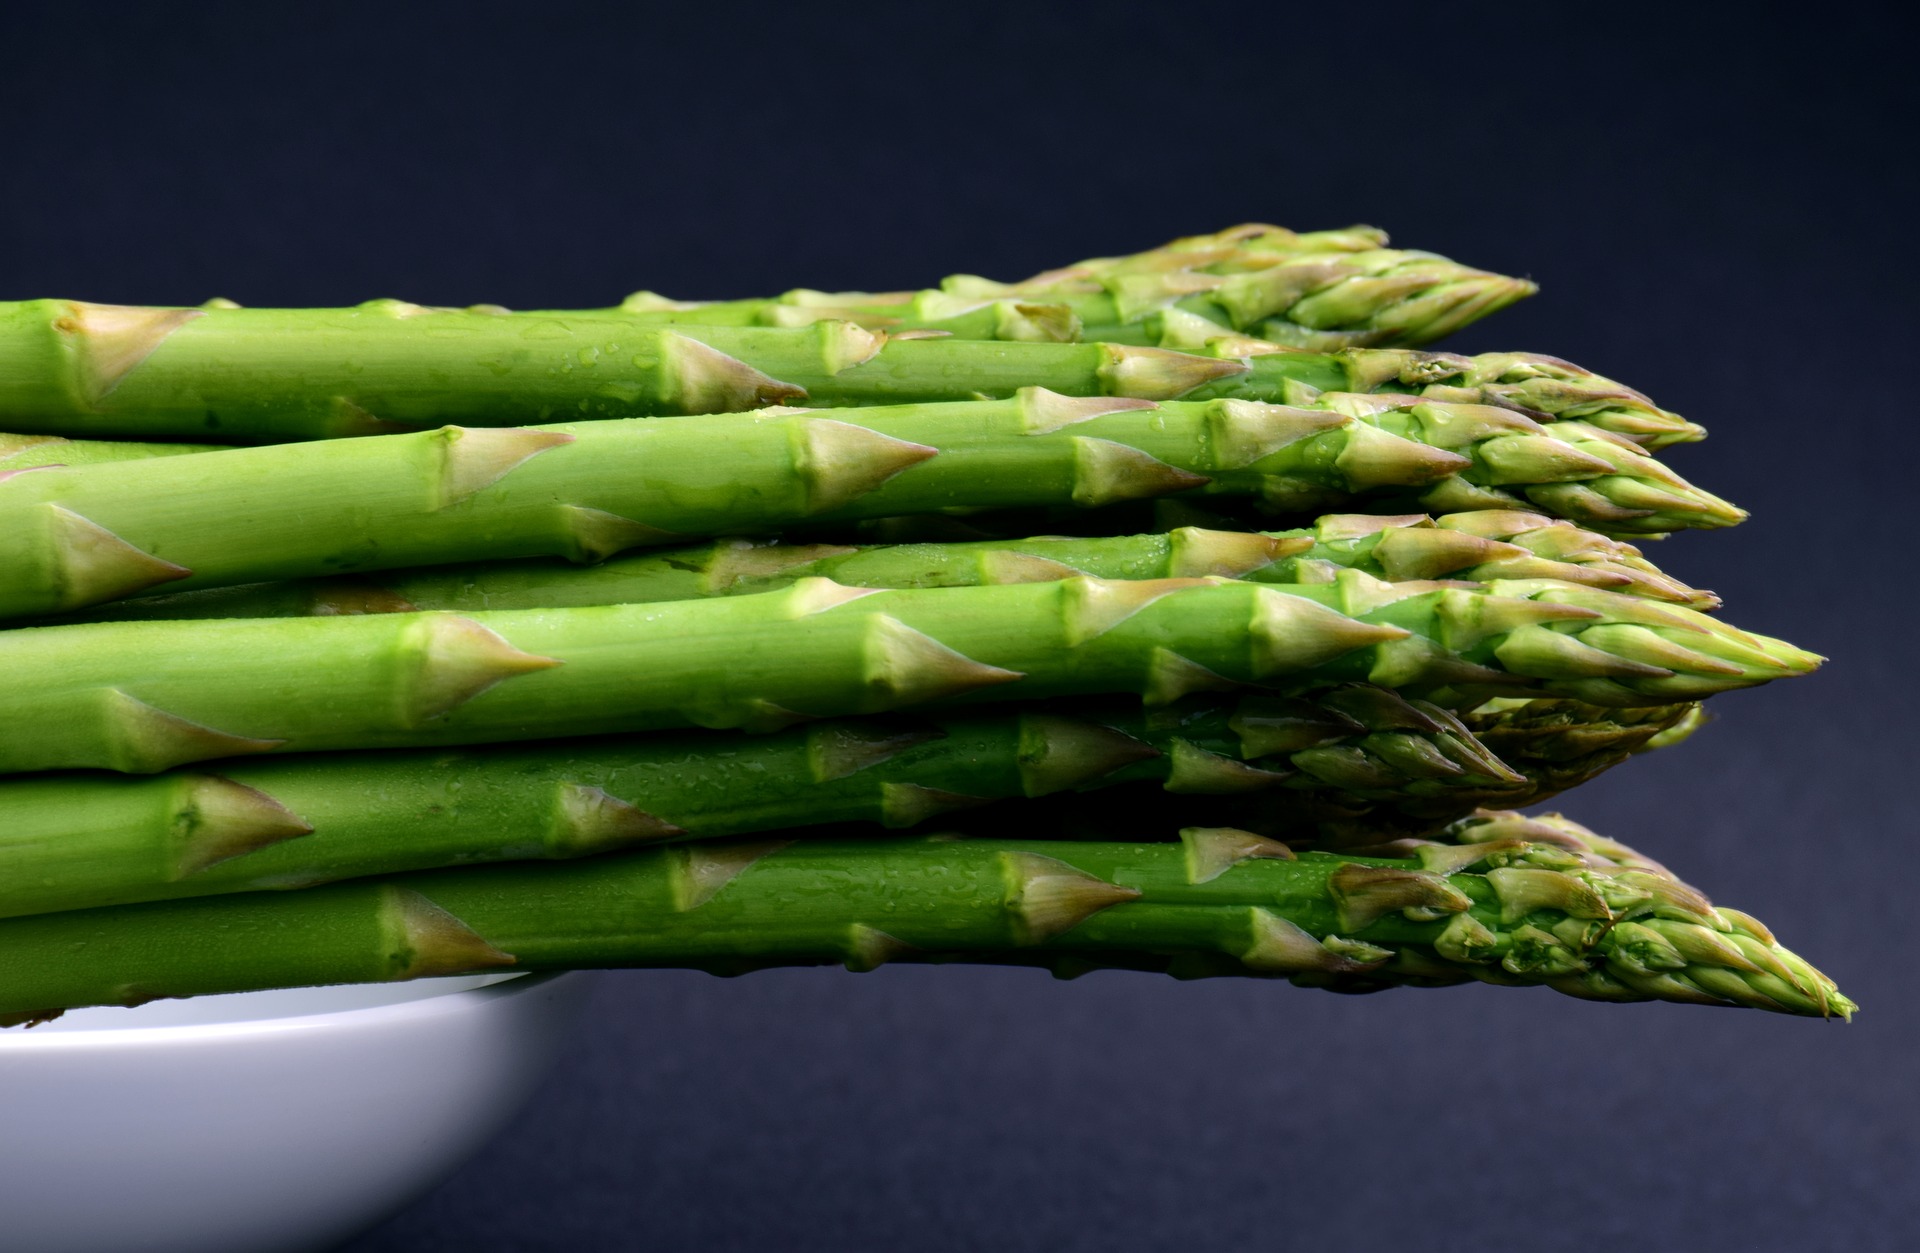 Asparagus benefits